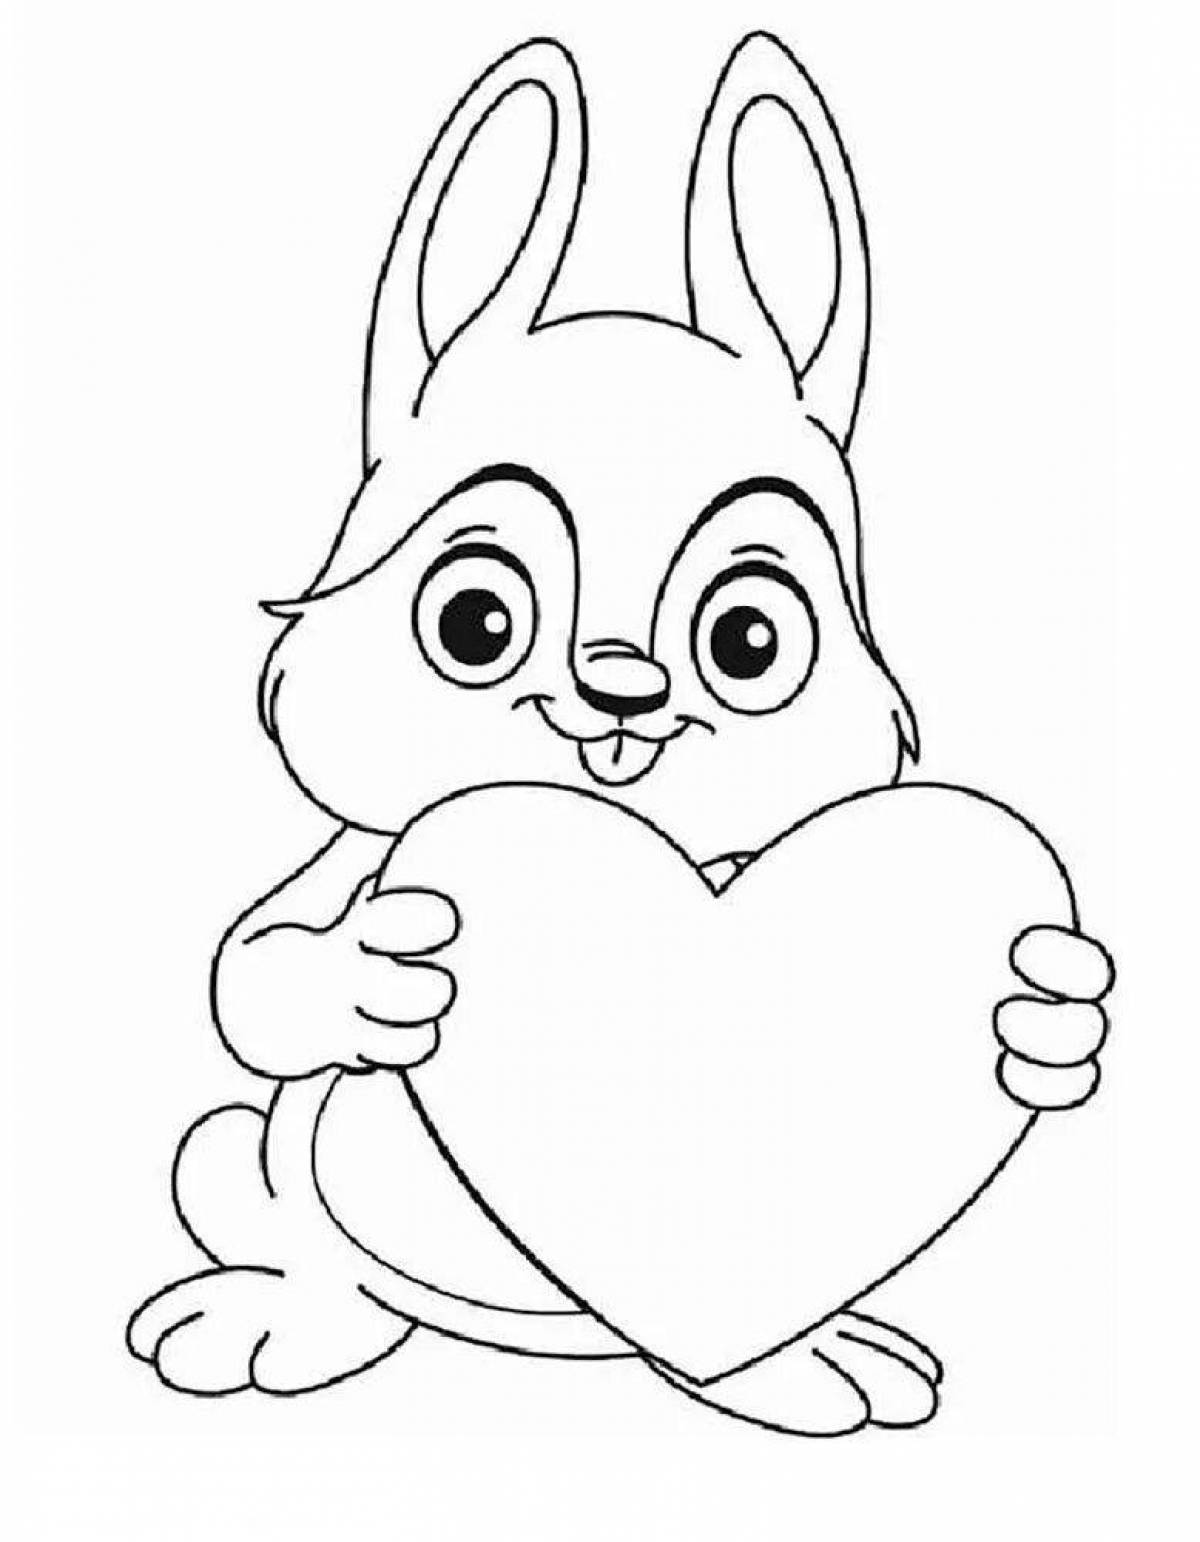 Bunny with a heart #1